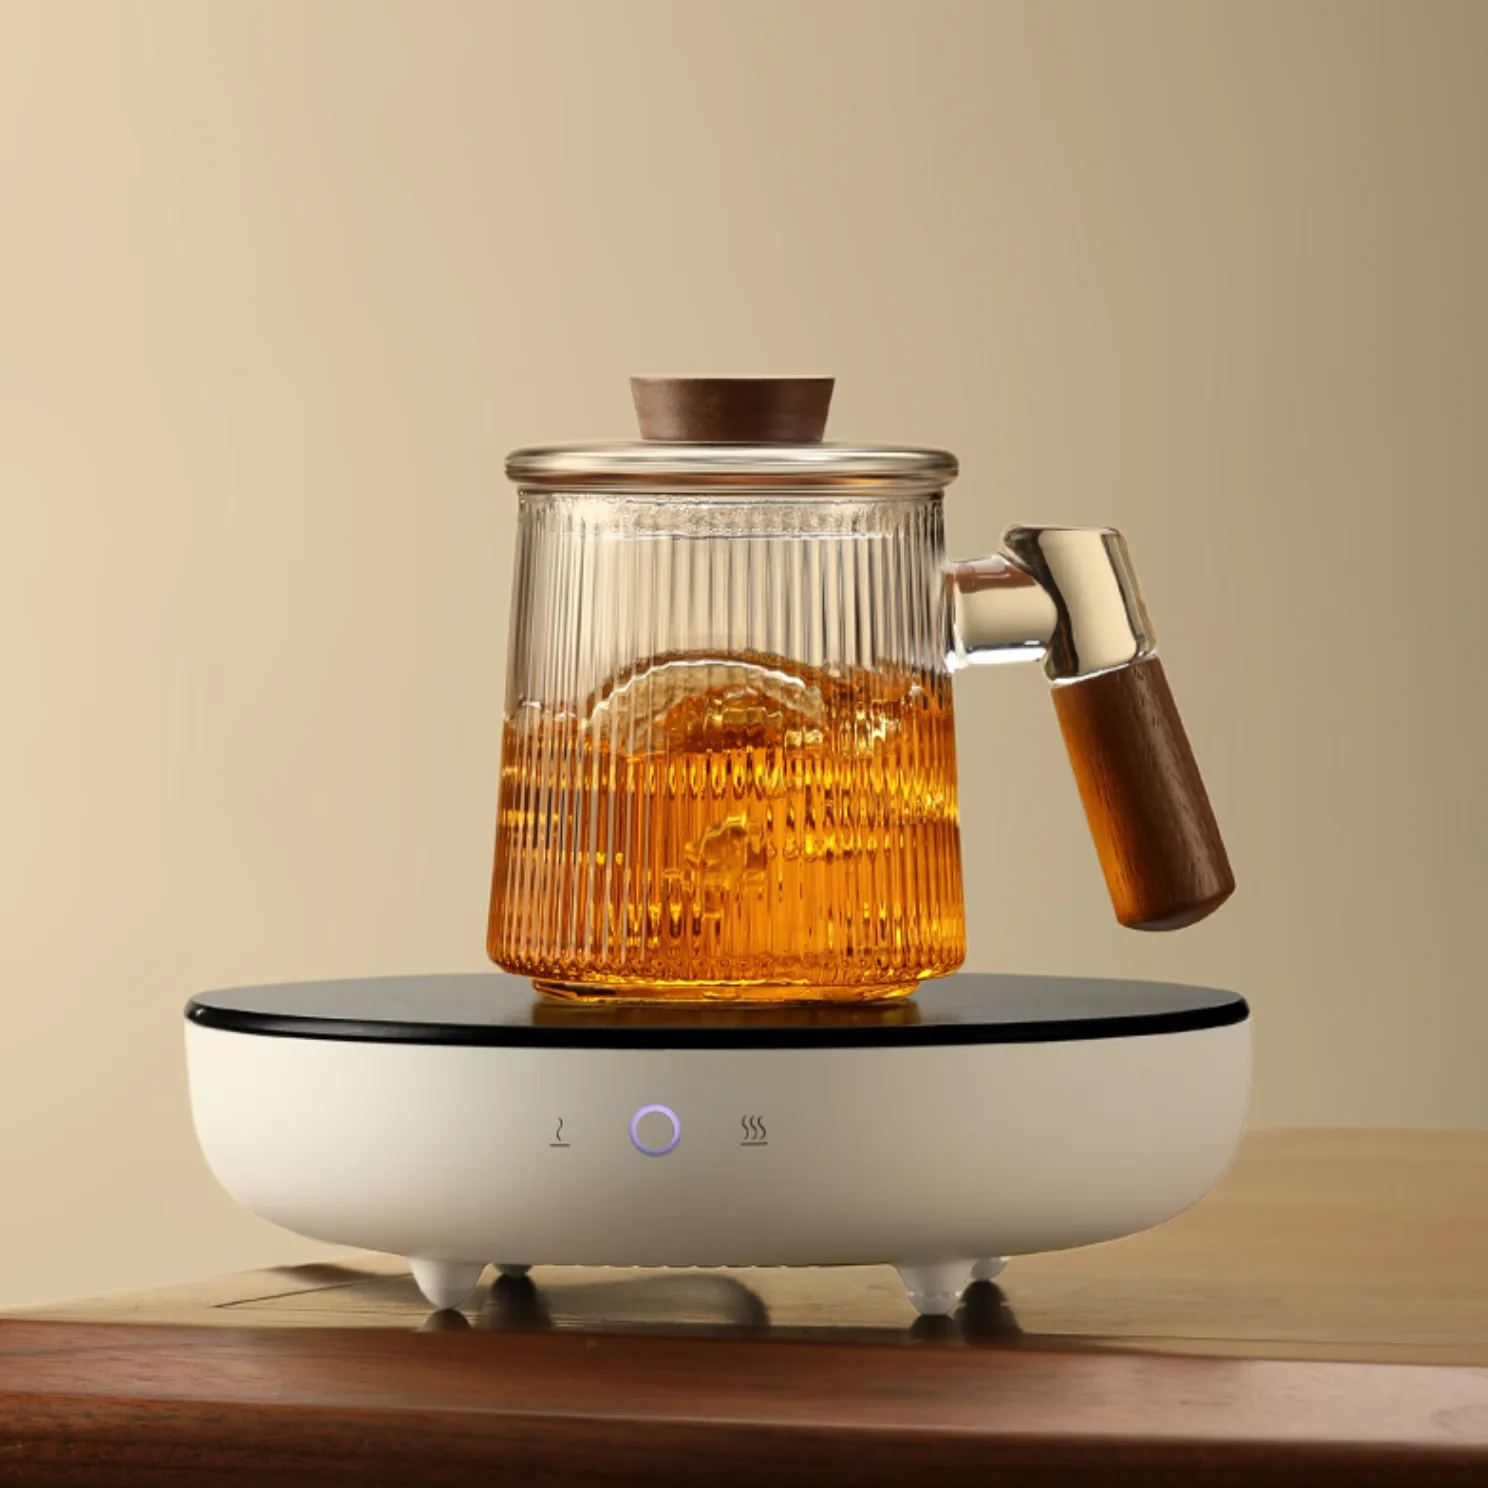 Glass Infuser Mug, Tea Infuser Mug, Glass Tea Maker, Glass Tea Cup